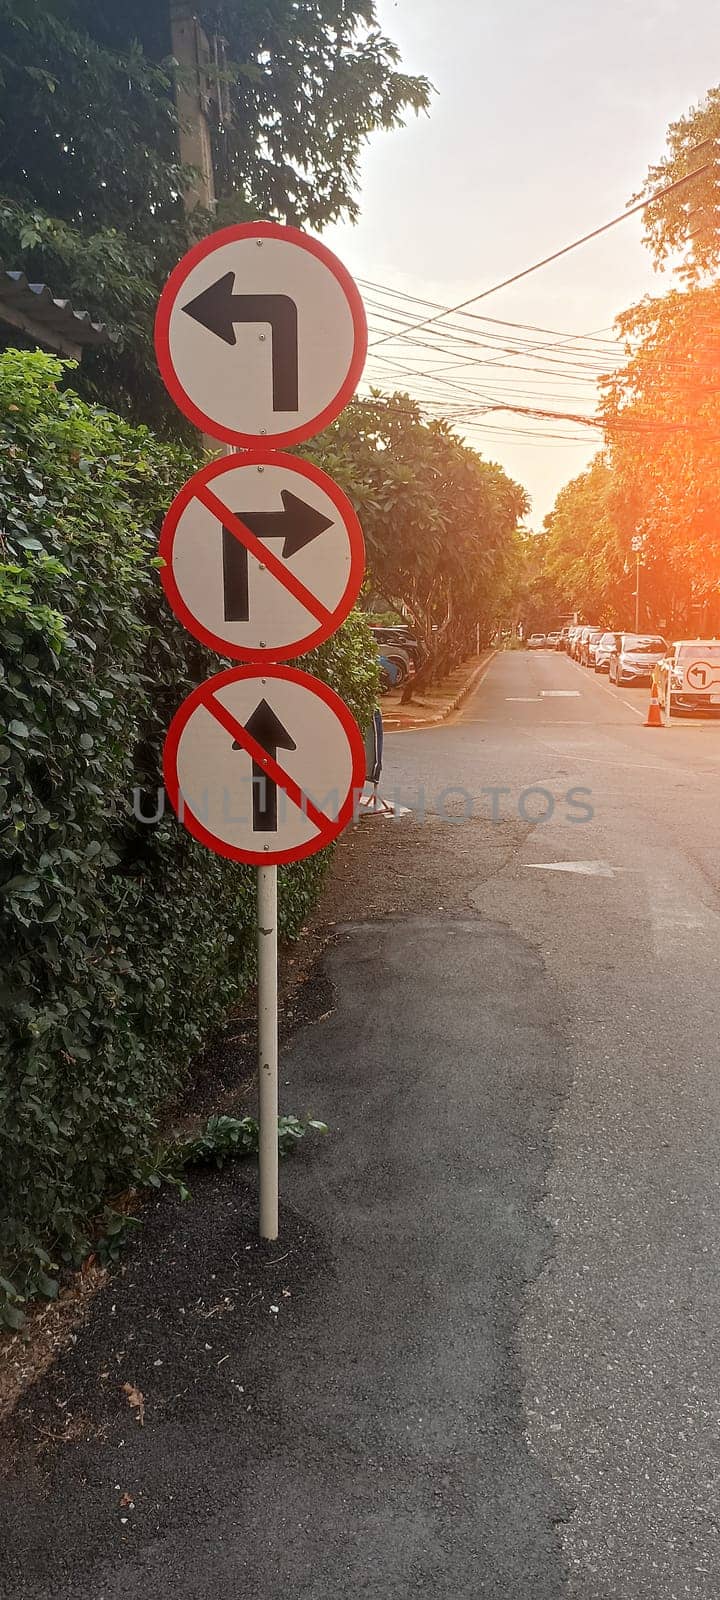 Traffic signs: Do not turn right, do not go straight, turn left.